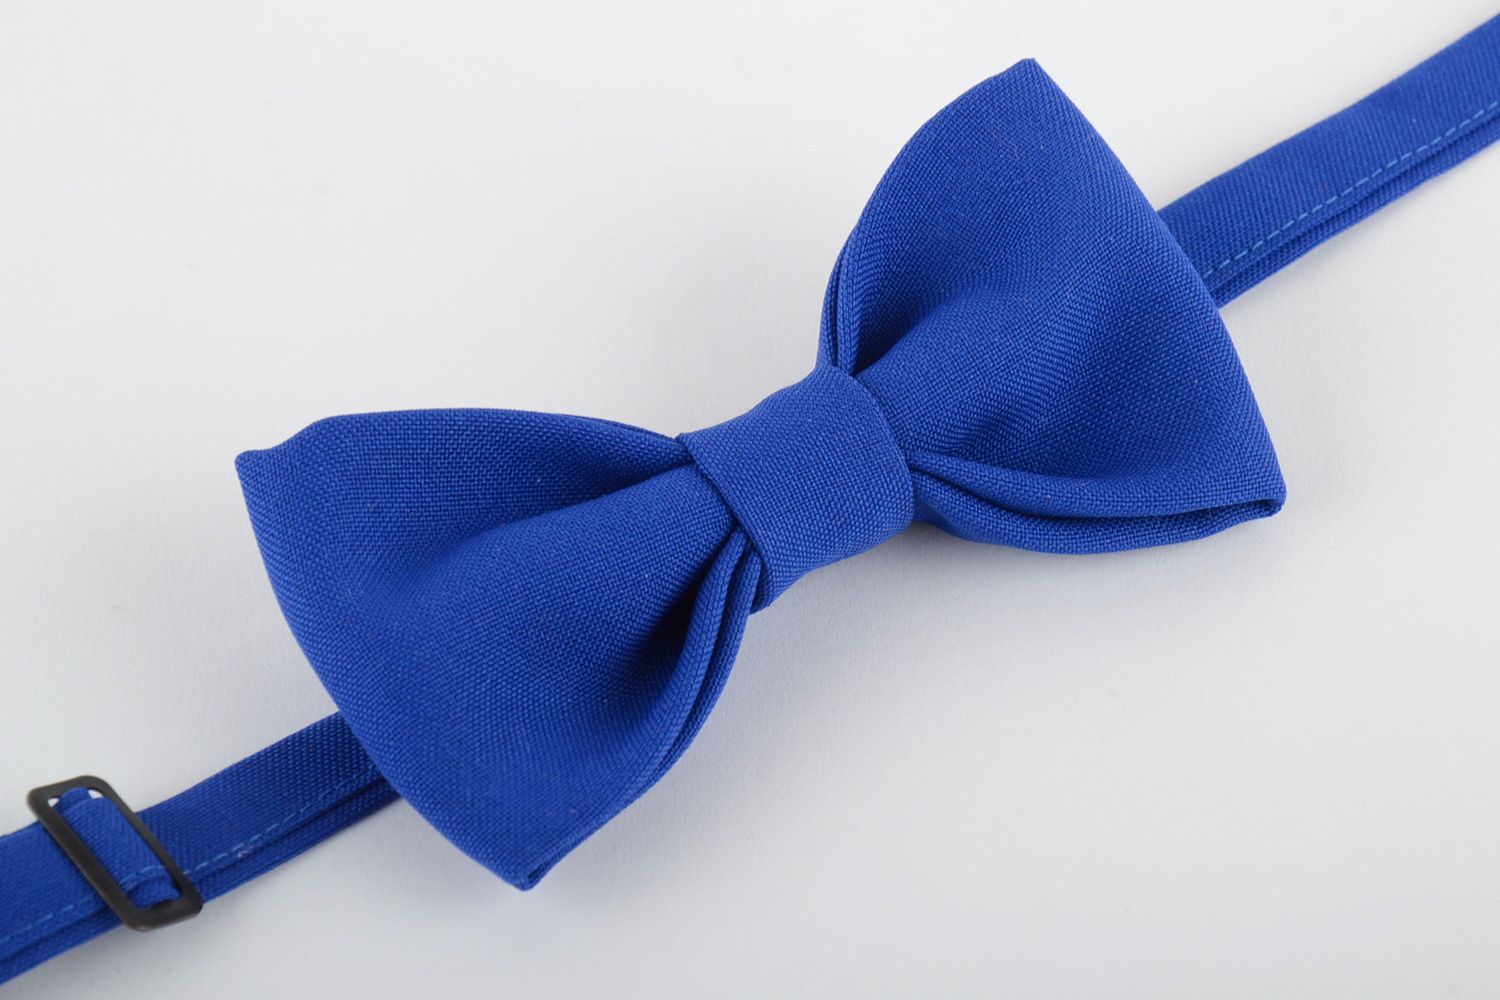 Festive handmade bow tie sewn of bright blue costume fabric for stylish men photo 4